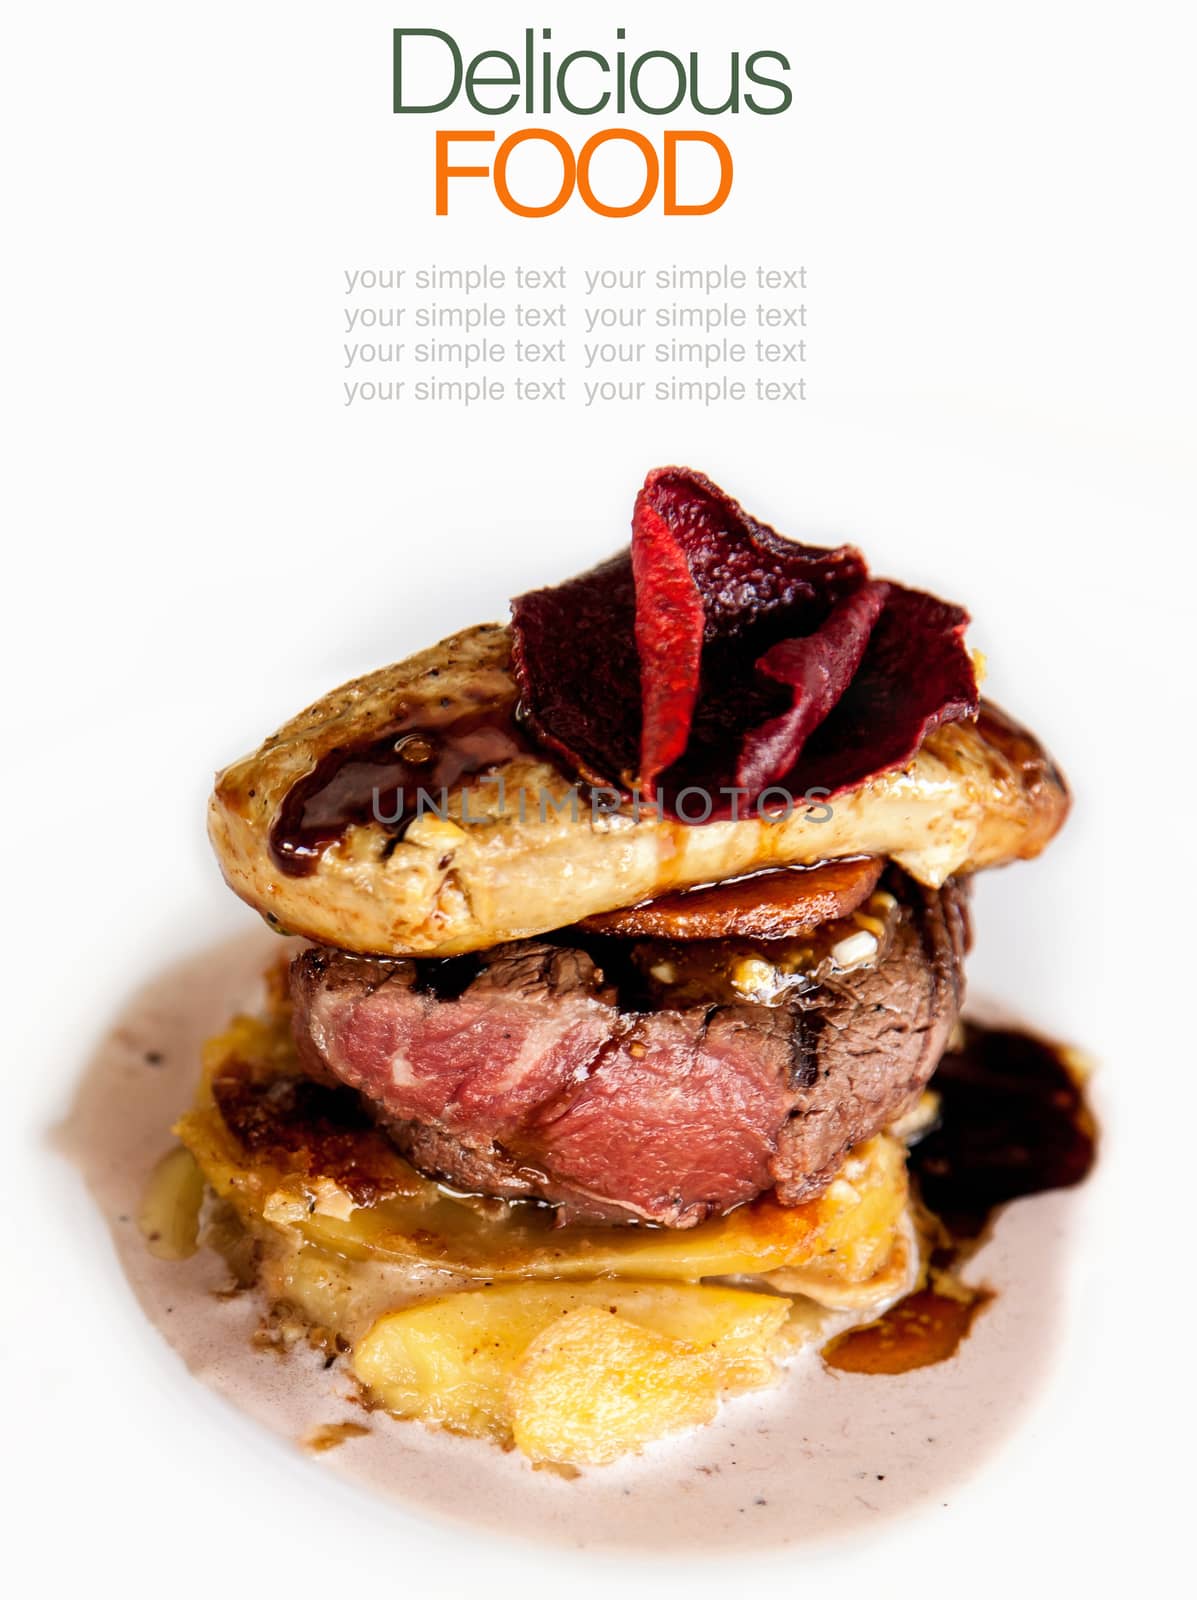 Australian premium fillet tenderloin steak with Fried foie gras.

